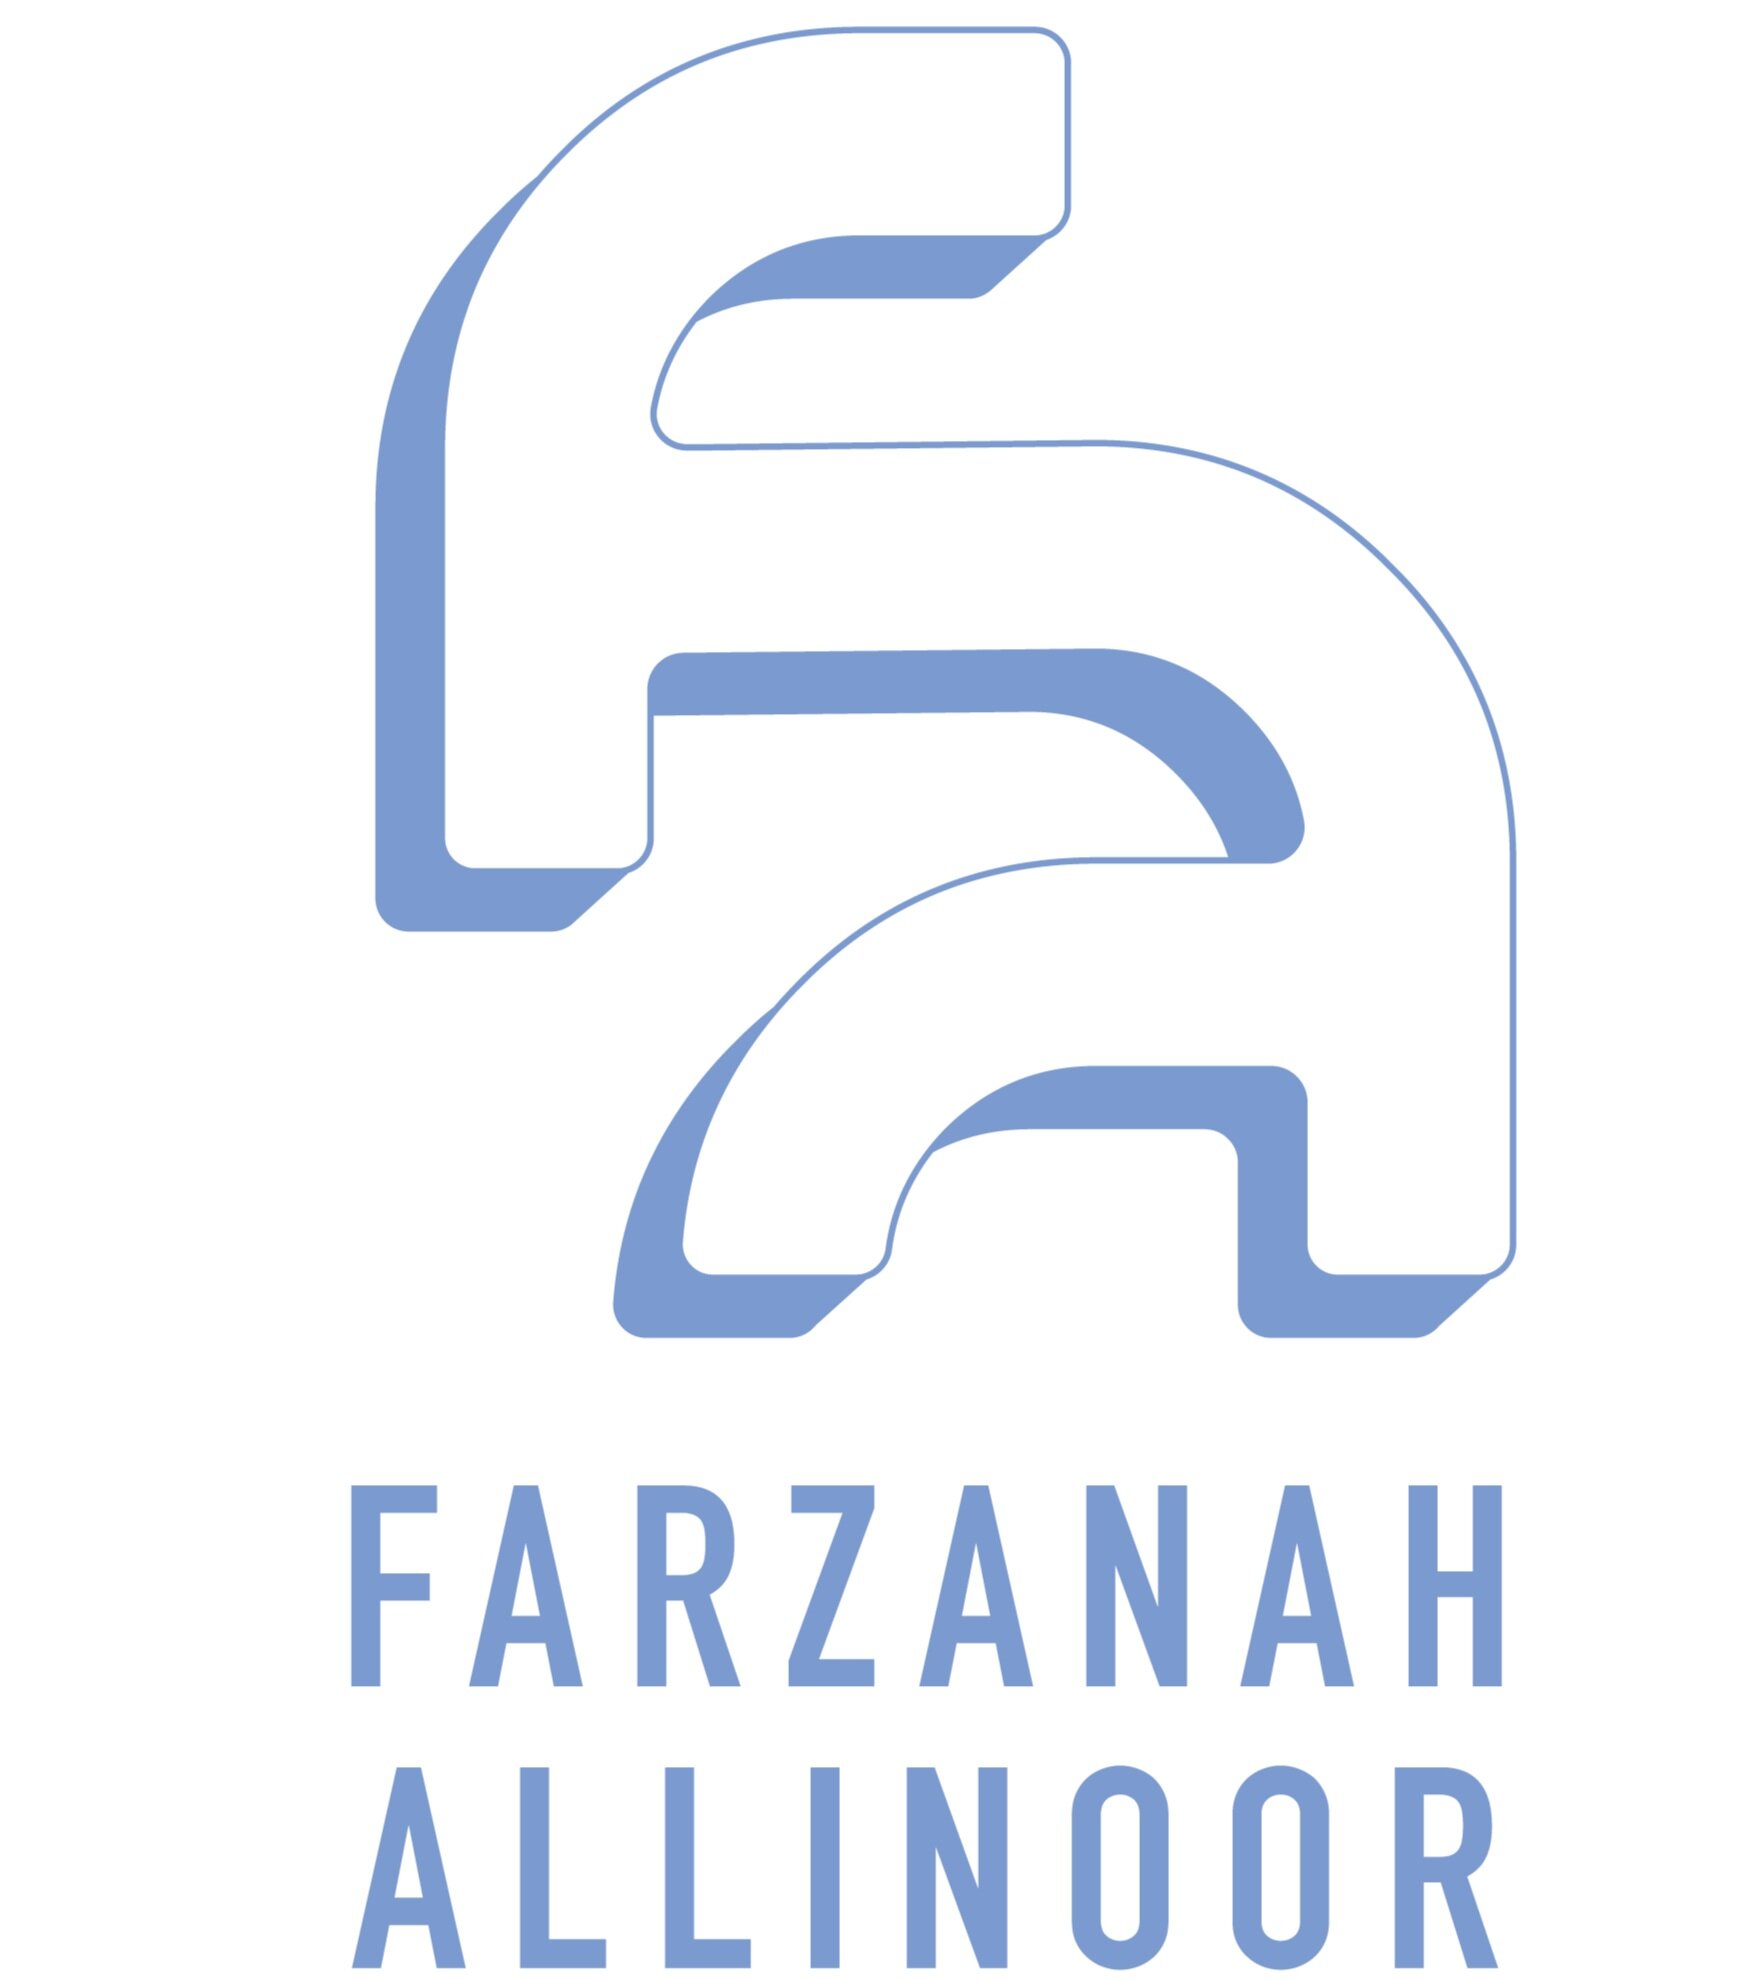 Farzanah Allinoor